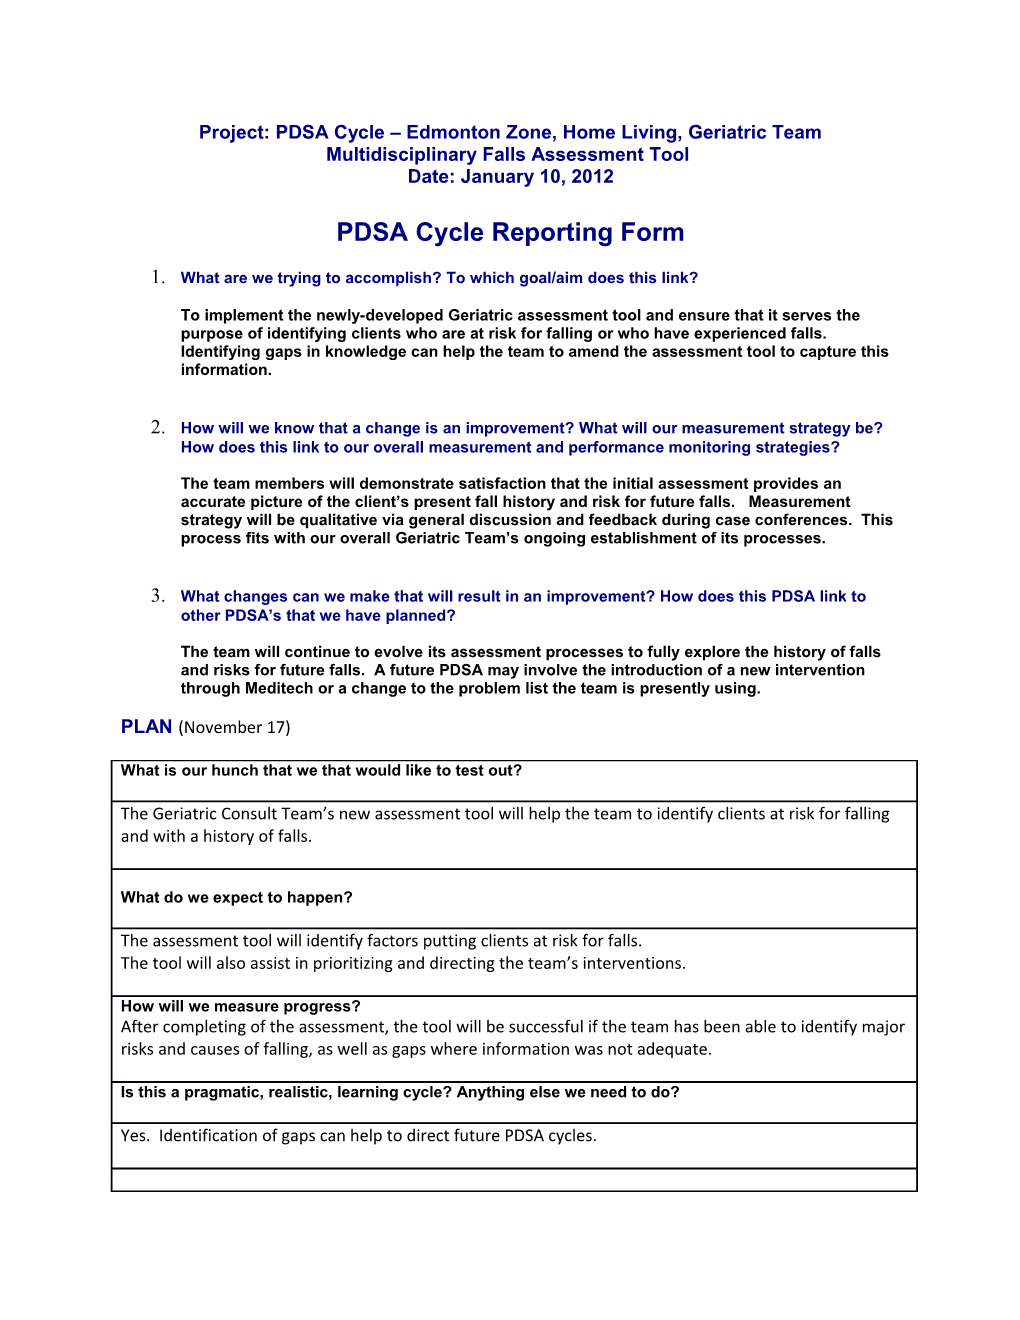 PSDA Cycle Document